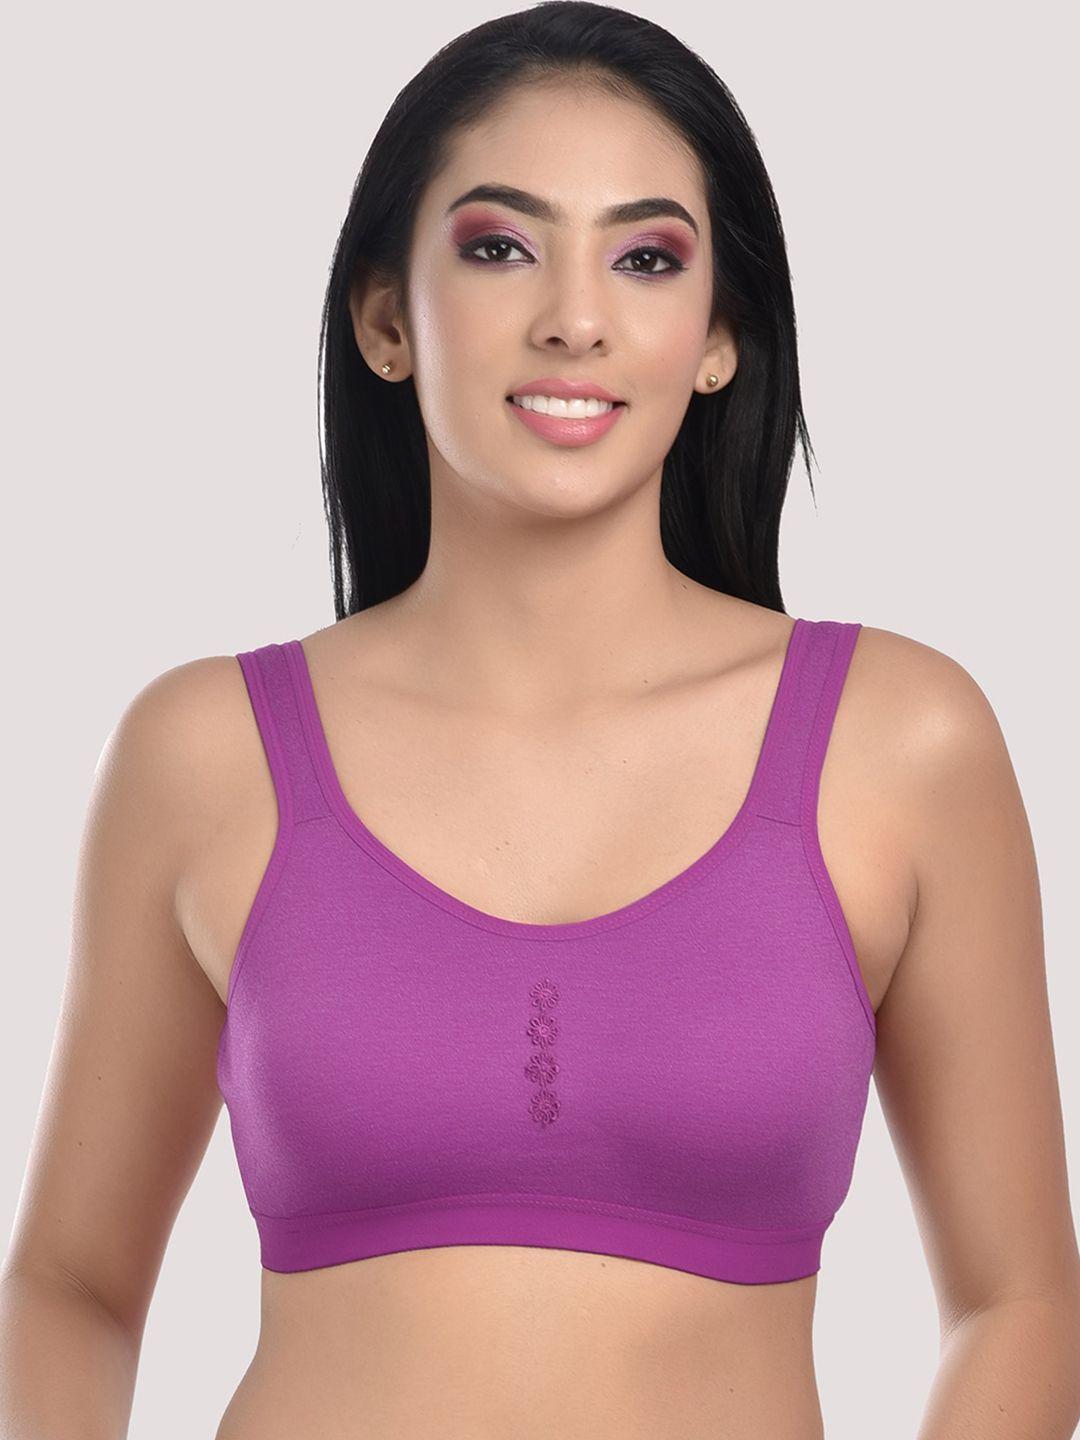 styfun purple bra